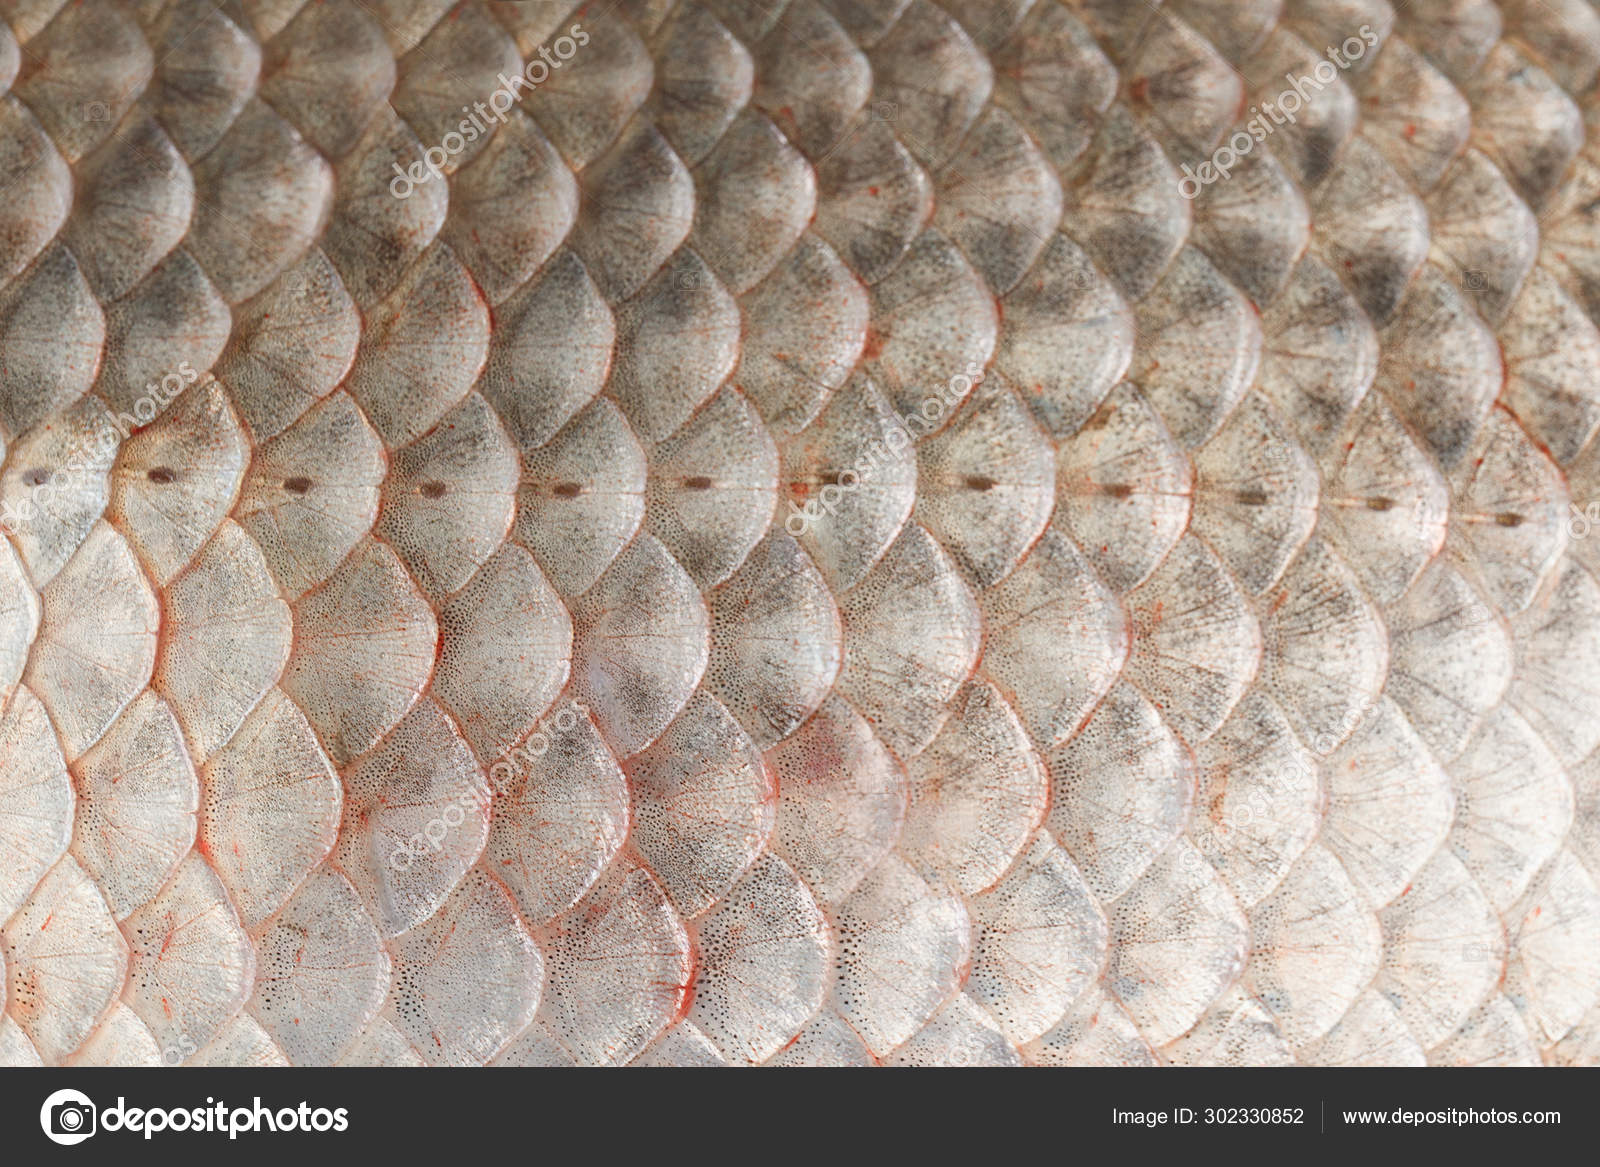 Fish scales skin texture macro view. — Stock Photo © Arybickii #302330852